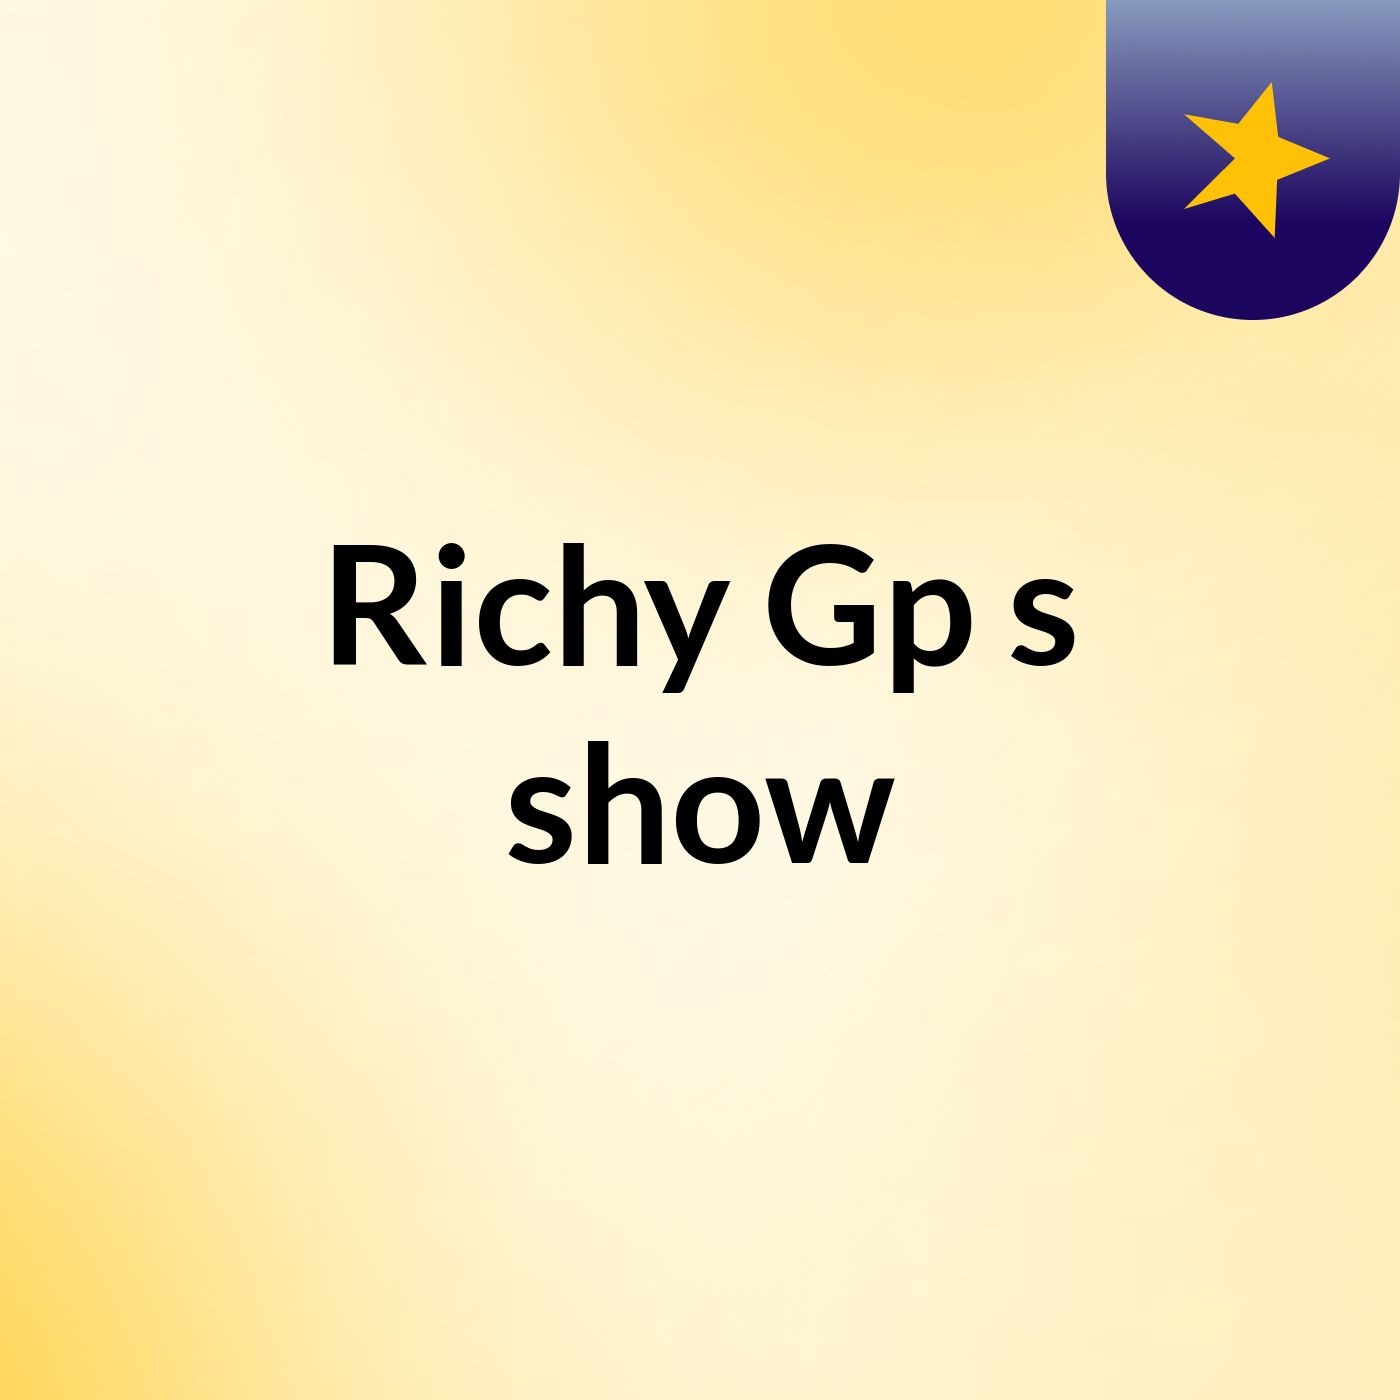 Richy Gp's show